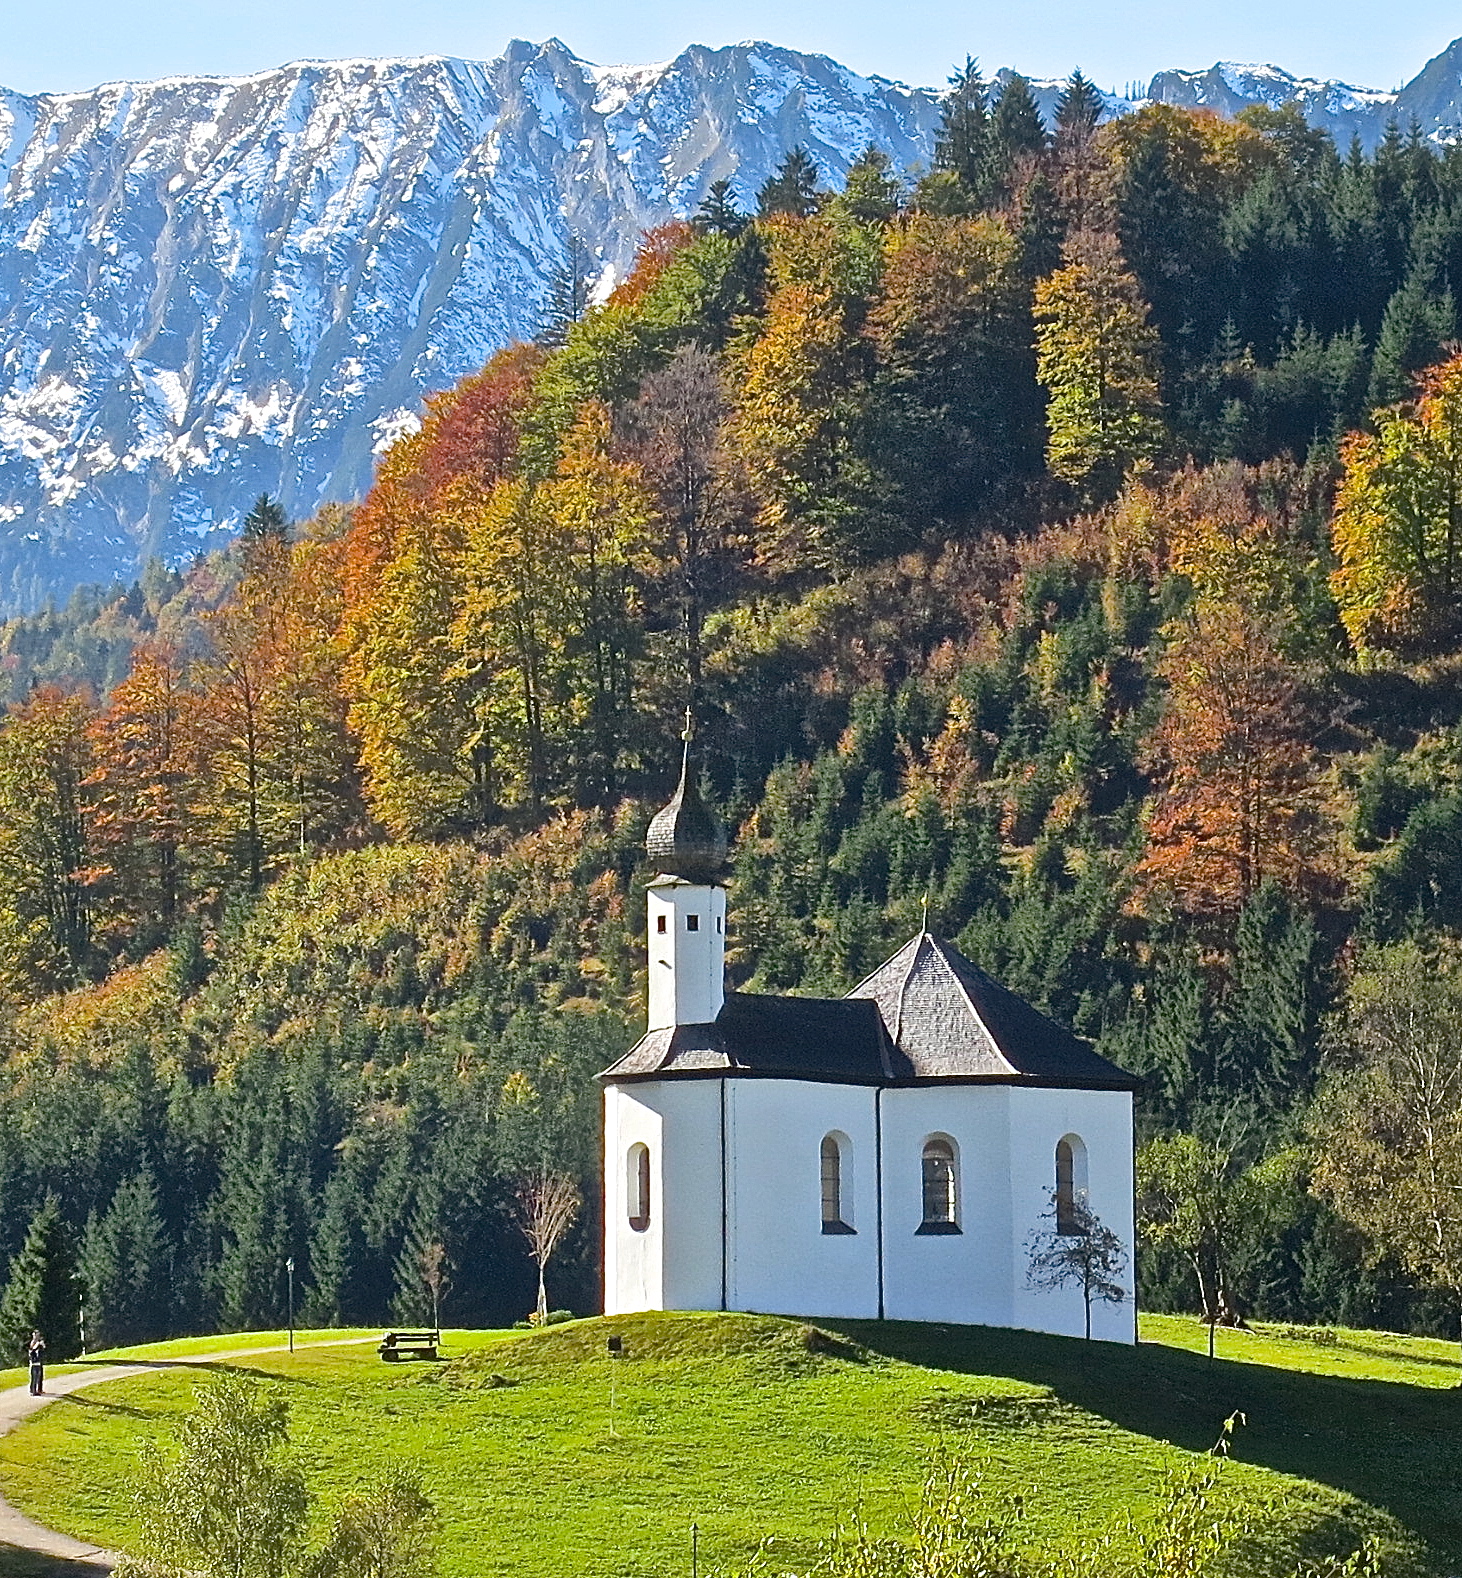 Perfect Alpine Scenery In Tirol, Austria